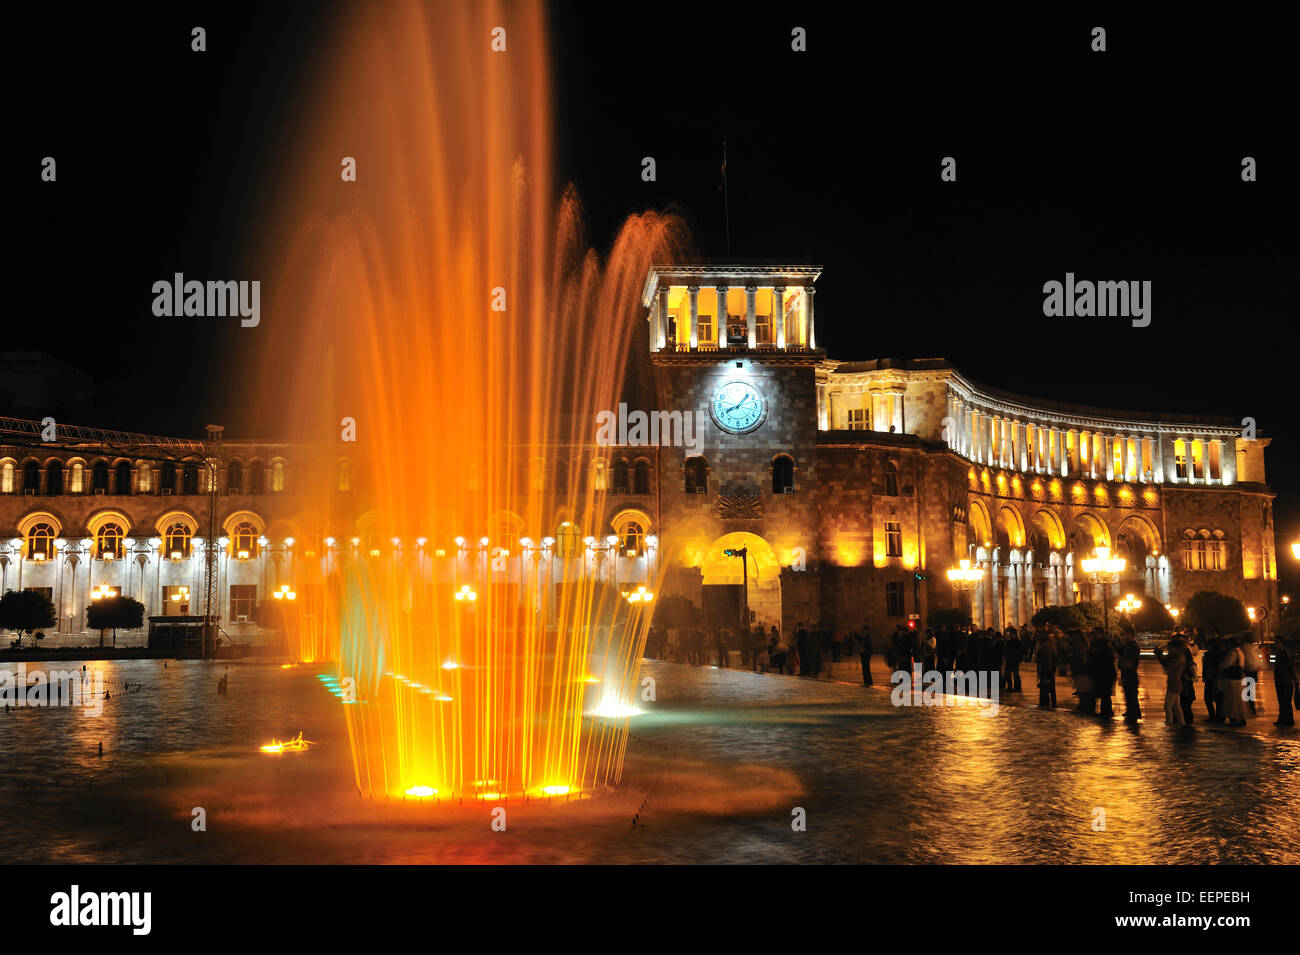 Fountains in Republic Square (Hanrapetutyan Hraparak) during light and sound show, Yerevan, Armenia Stock Photo